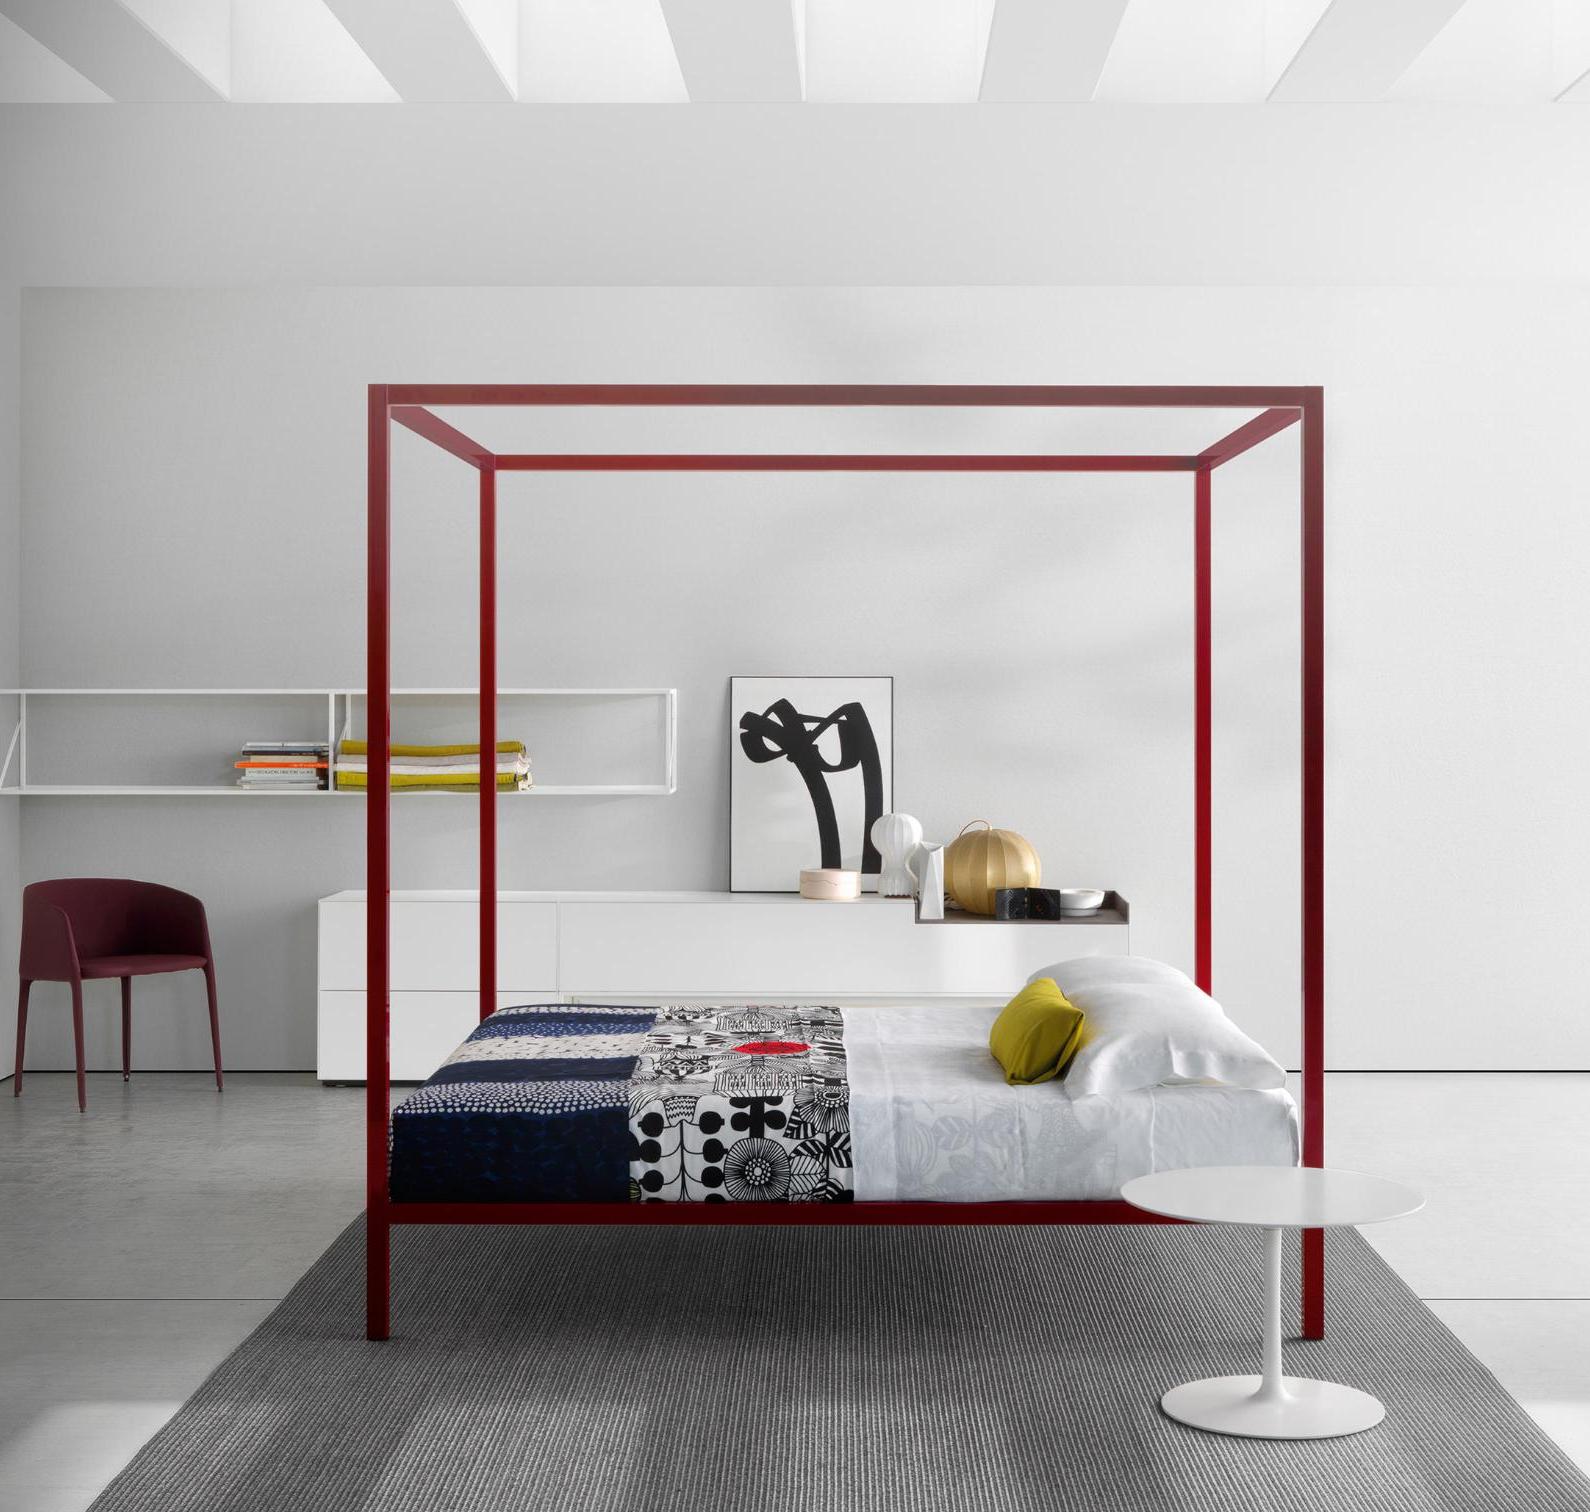 Aluminium Canopy Bed ☞ Structure: Matt Painted White X053 ☞ Dimensions: 150 x 210 cm